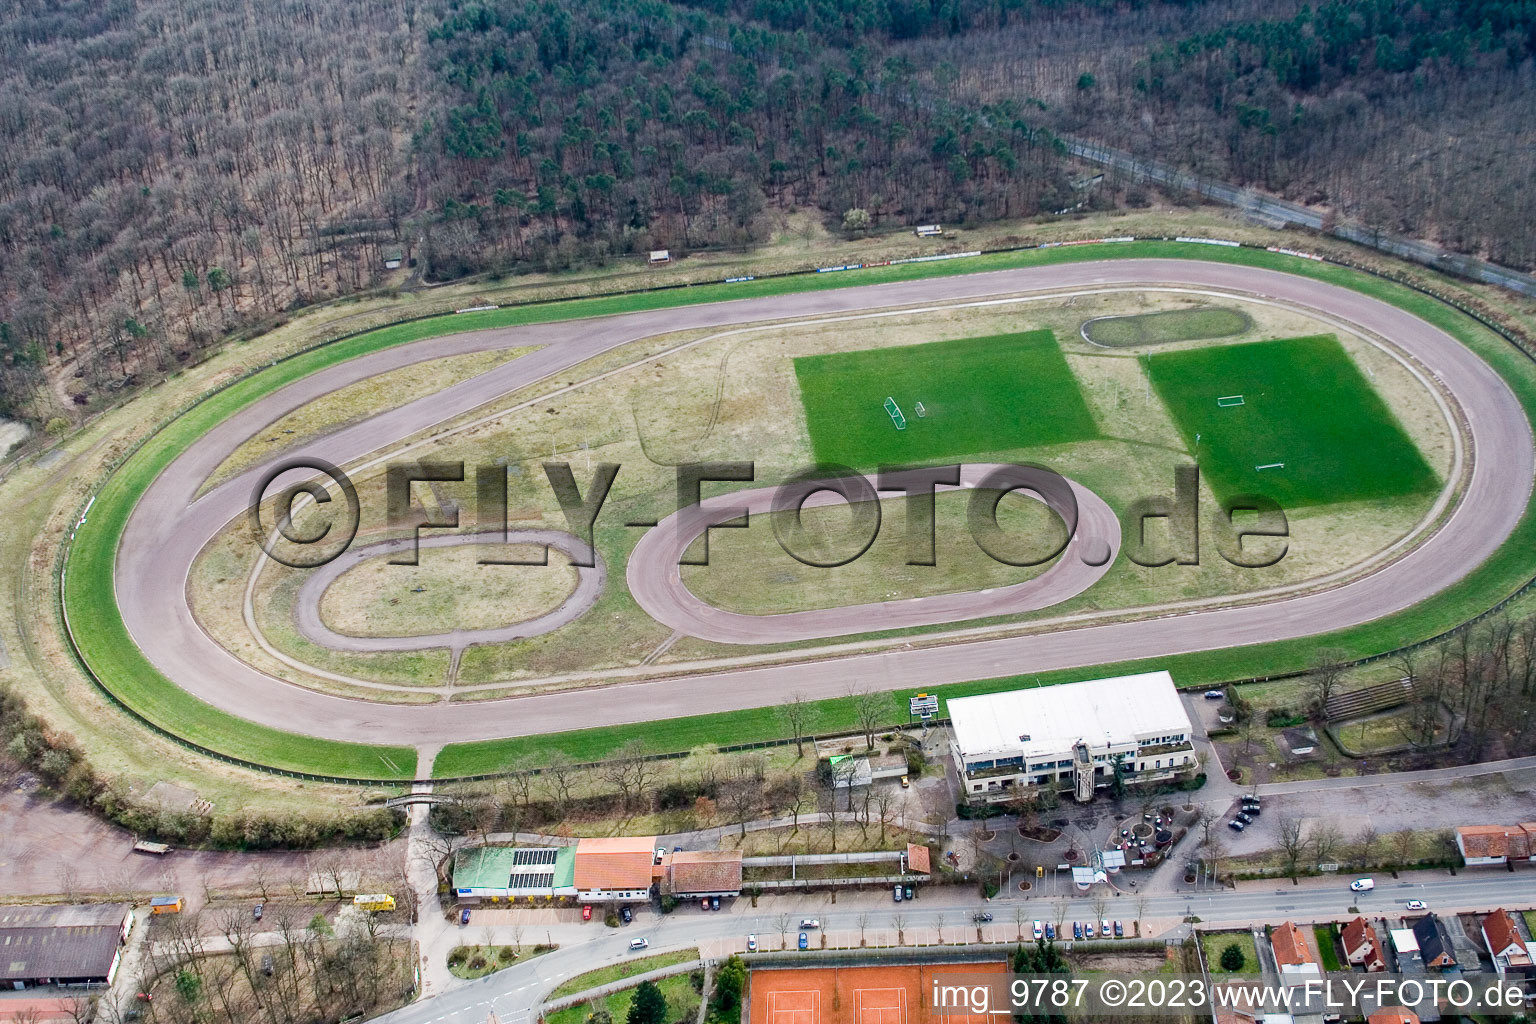 Speedway from the north in the district Herxheim in Herxheim bei Landau/Pfalz in the state Rhineland-Palatinate, Germany